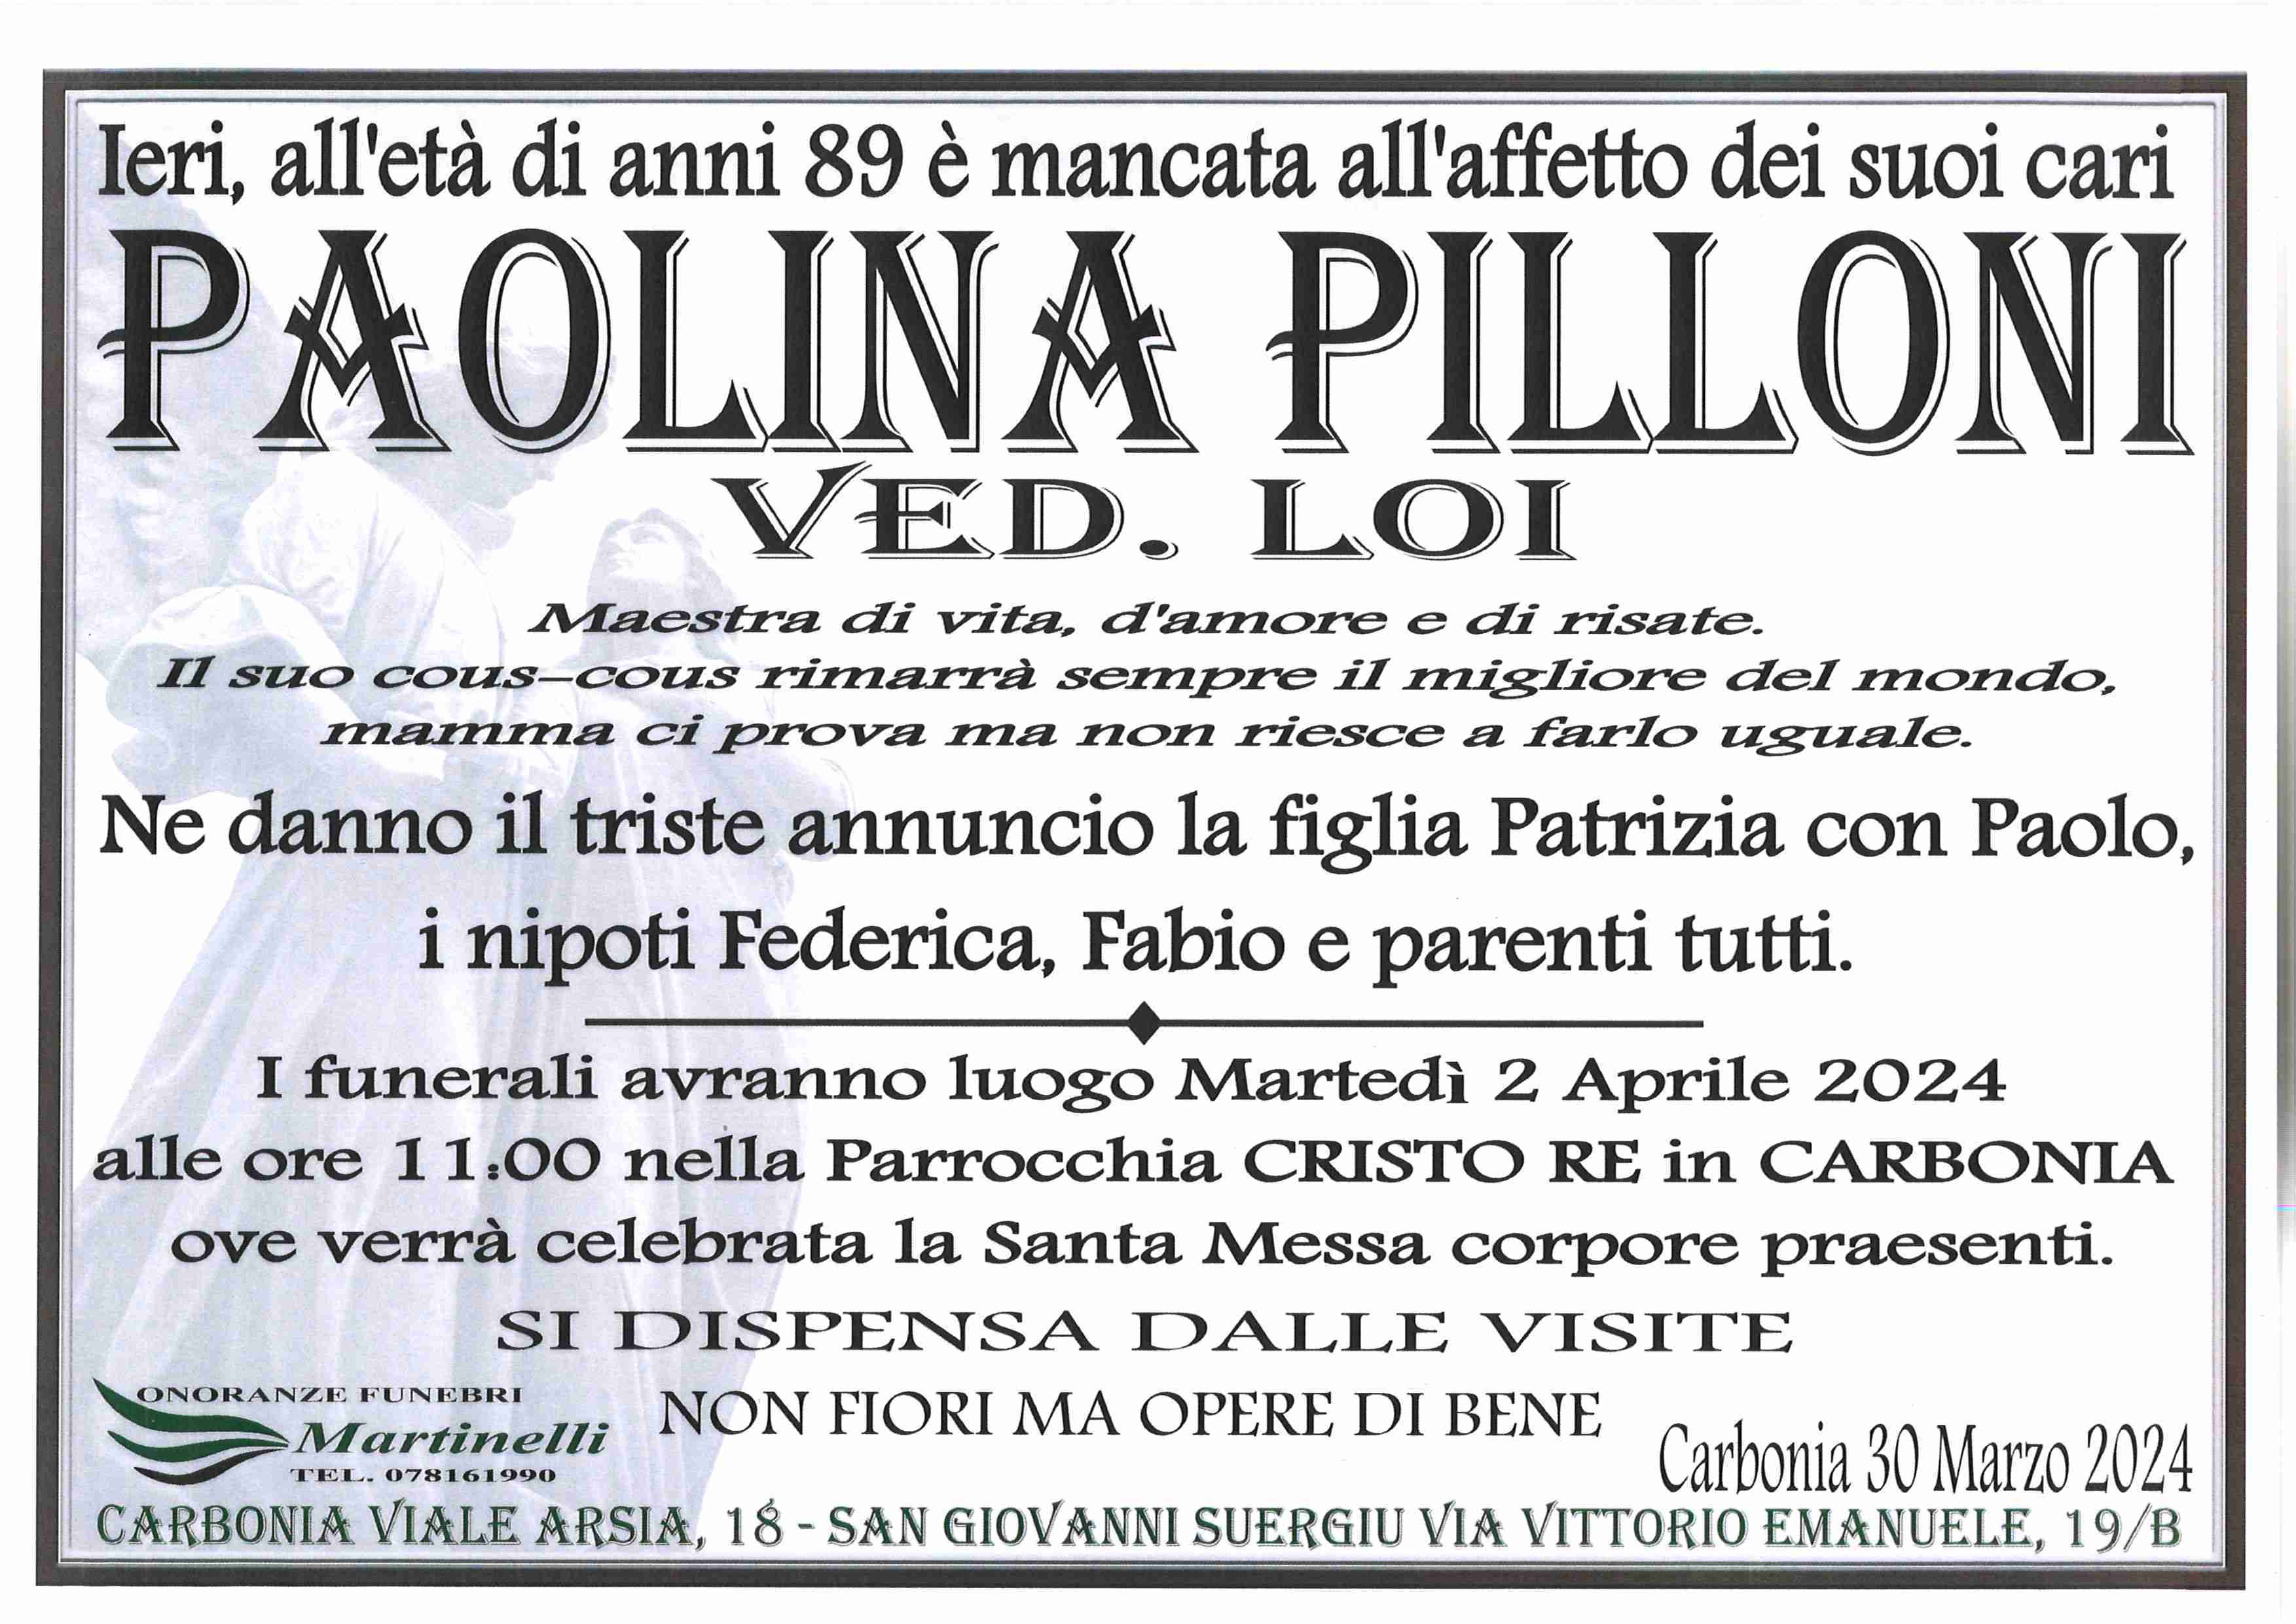 Paolina Pilloni